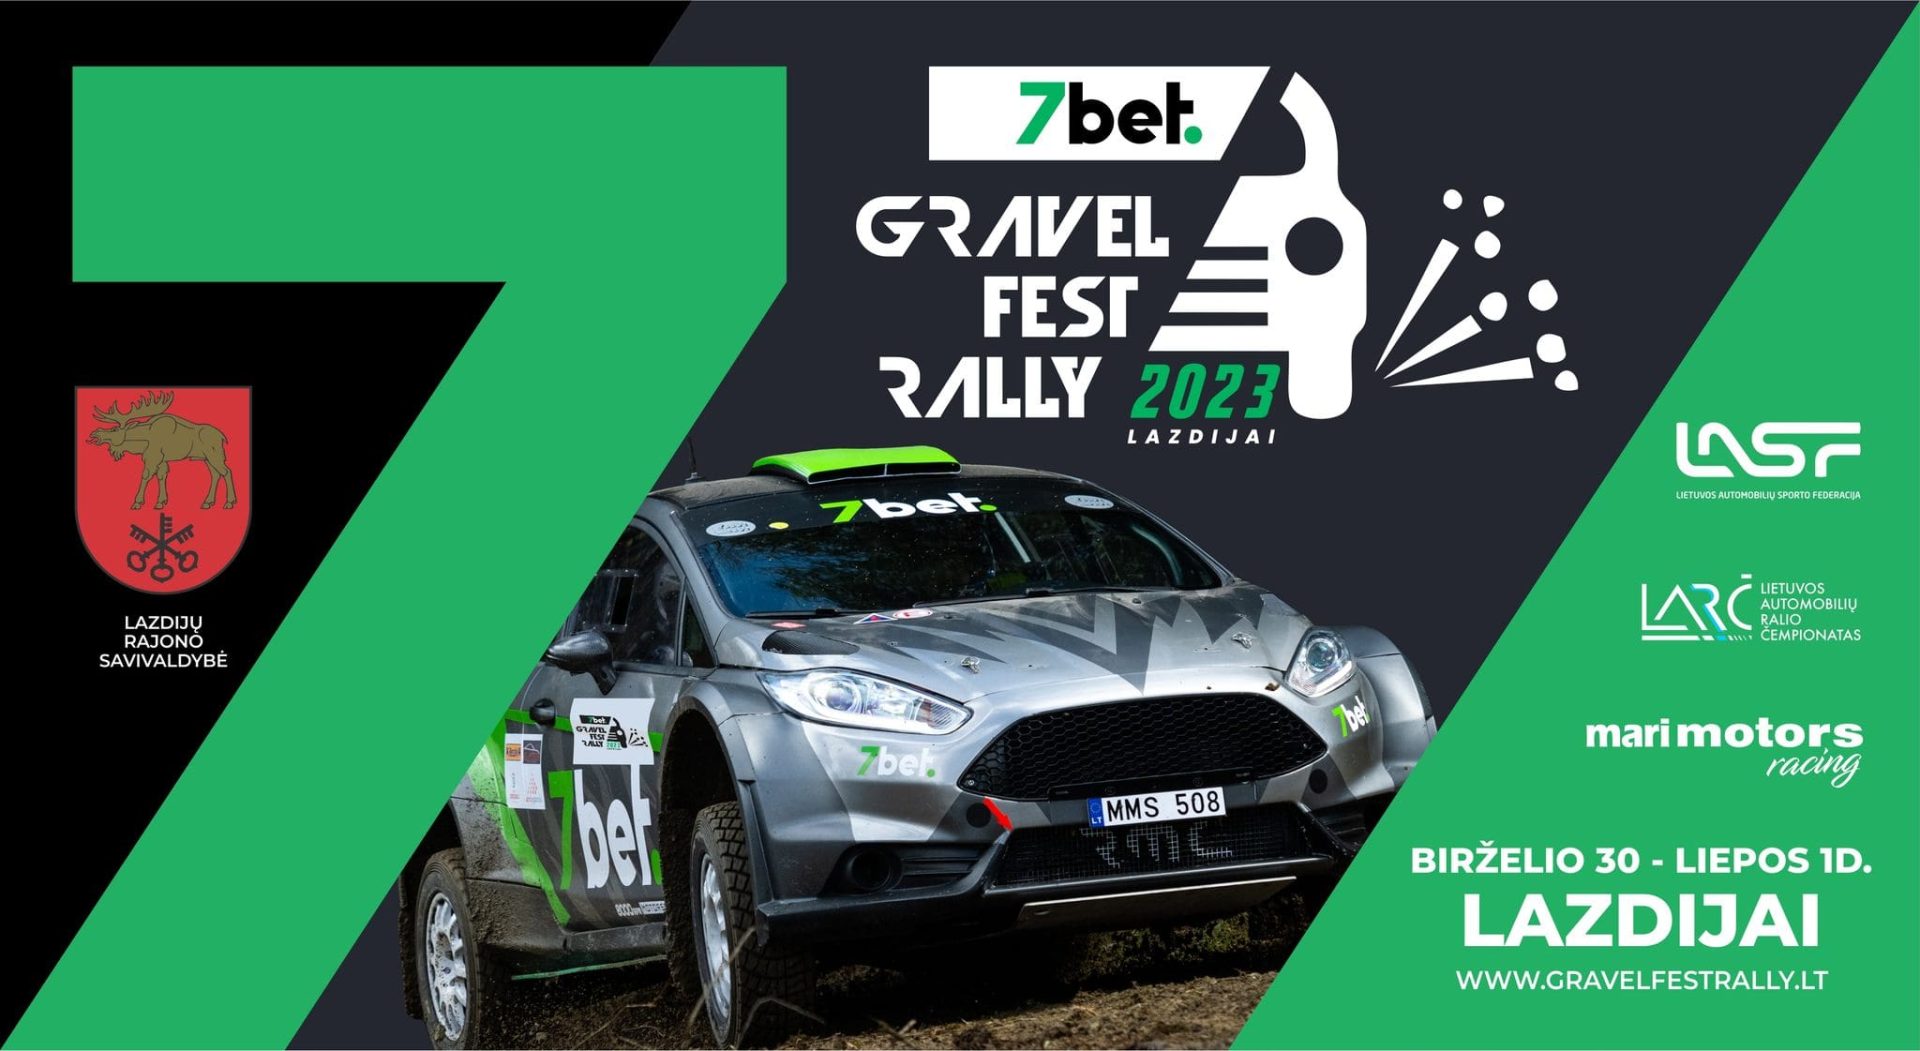 7bet Gravel Fest Rally - Lazdijai 2023. III Lietuvos automobilių ralio čempionato etapas.